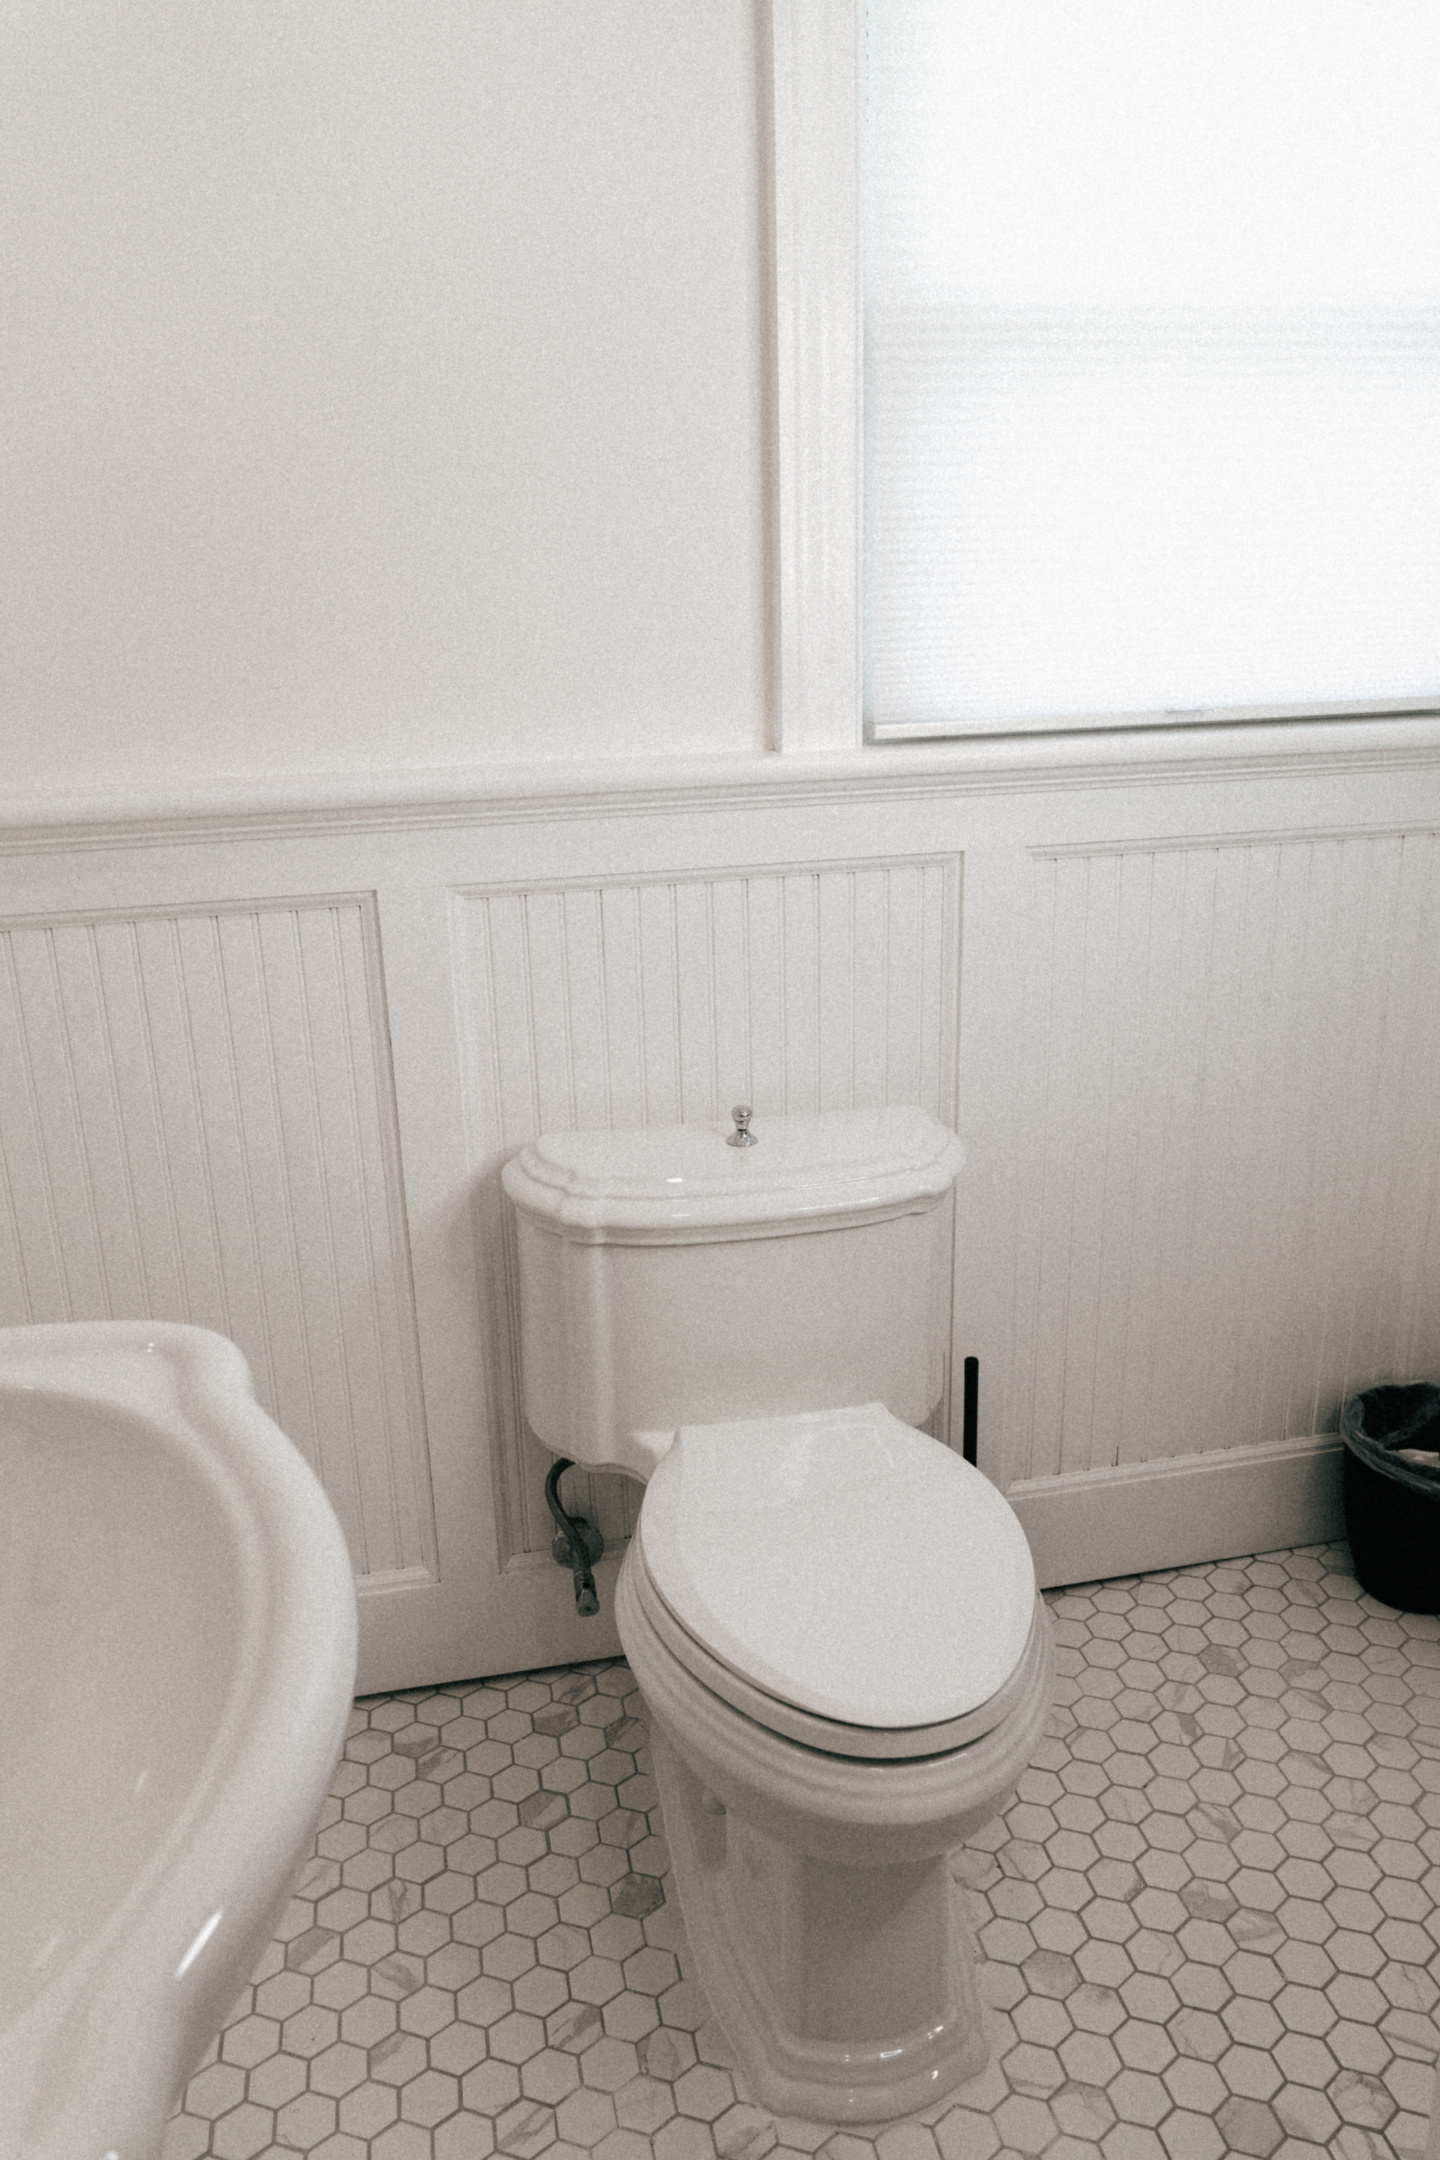 Simply by Simone - Simone Piliero - My Black and White Bathroom Renovation - Finished Photos - Toilet #bathroom #home #renovation #bathroomrenovation #diyhome #bathroomtiles #bathroomdecor #bathroomideas #bathroomrenovationideas